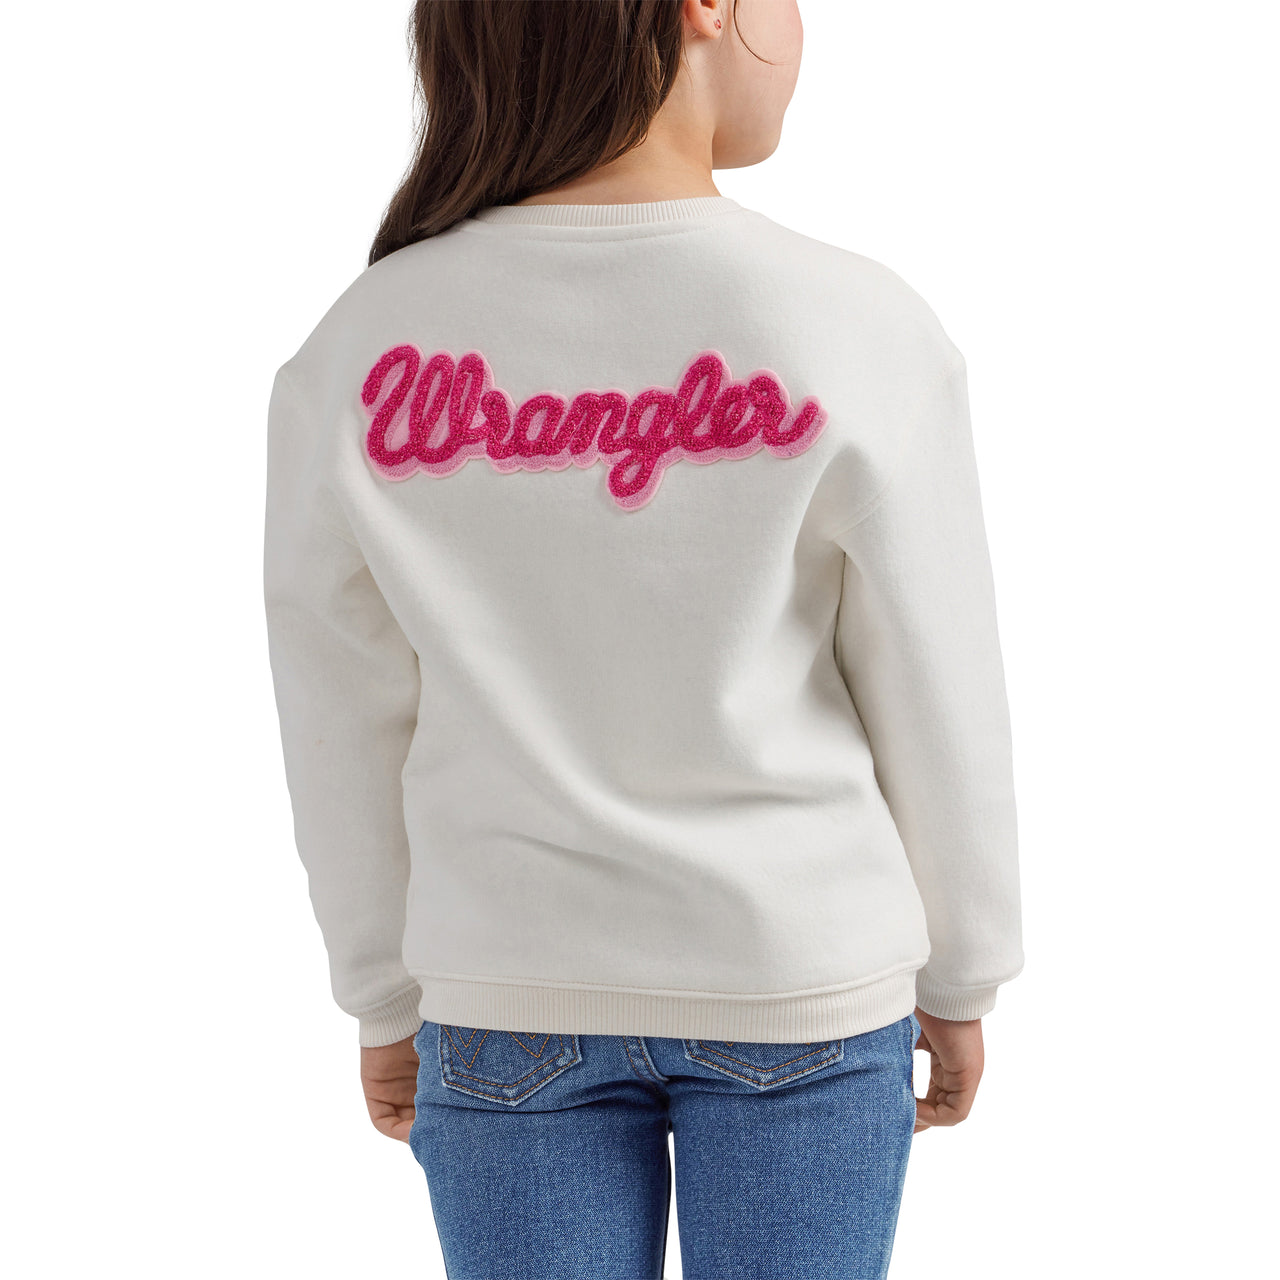 Wrangler X Barbie Girl's Sweatshirt - White